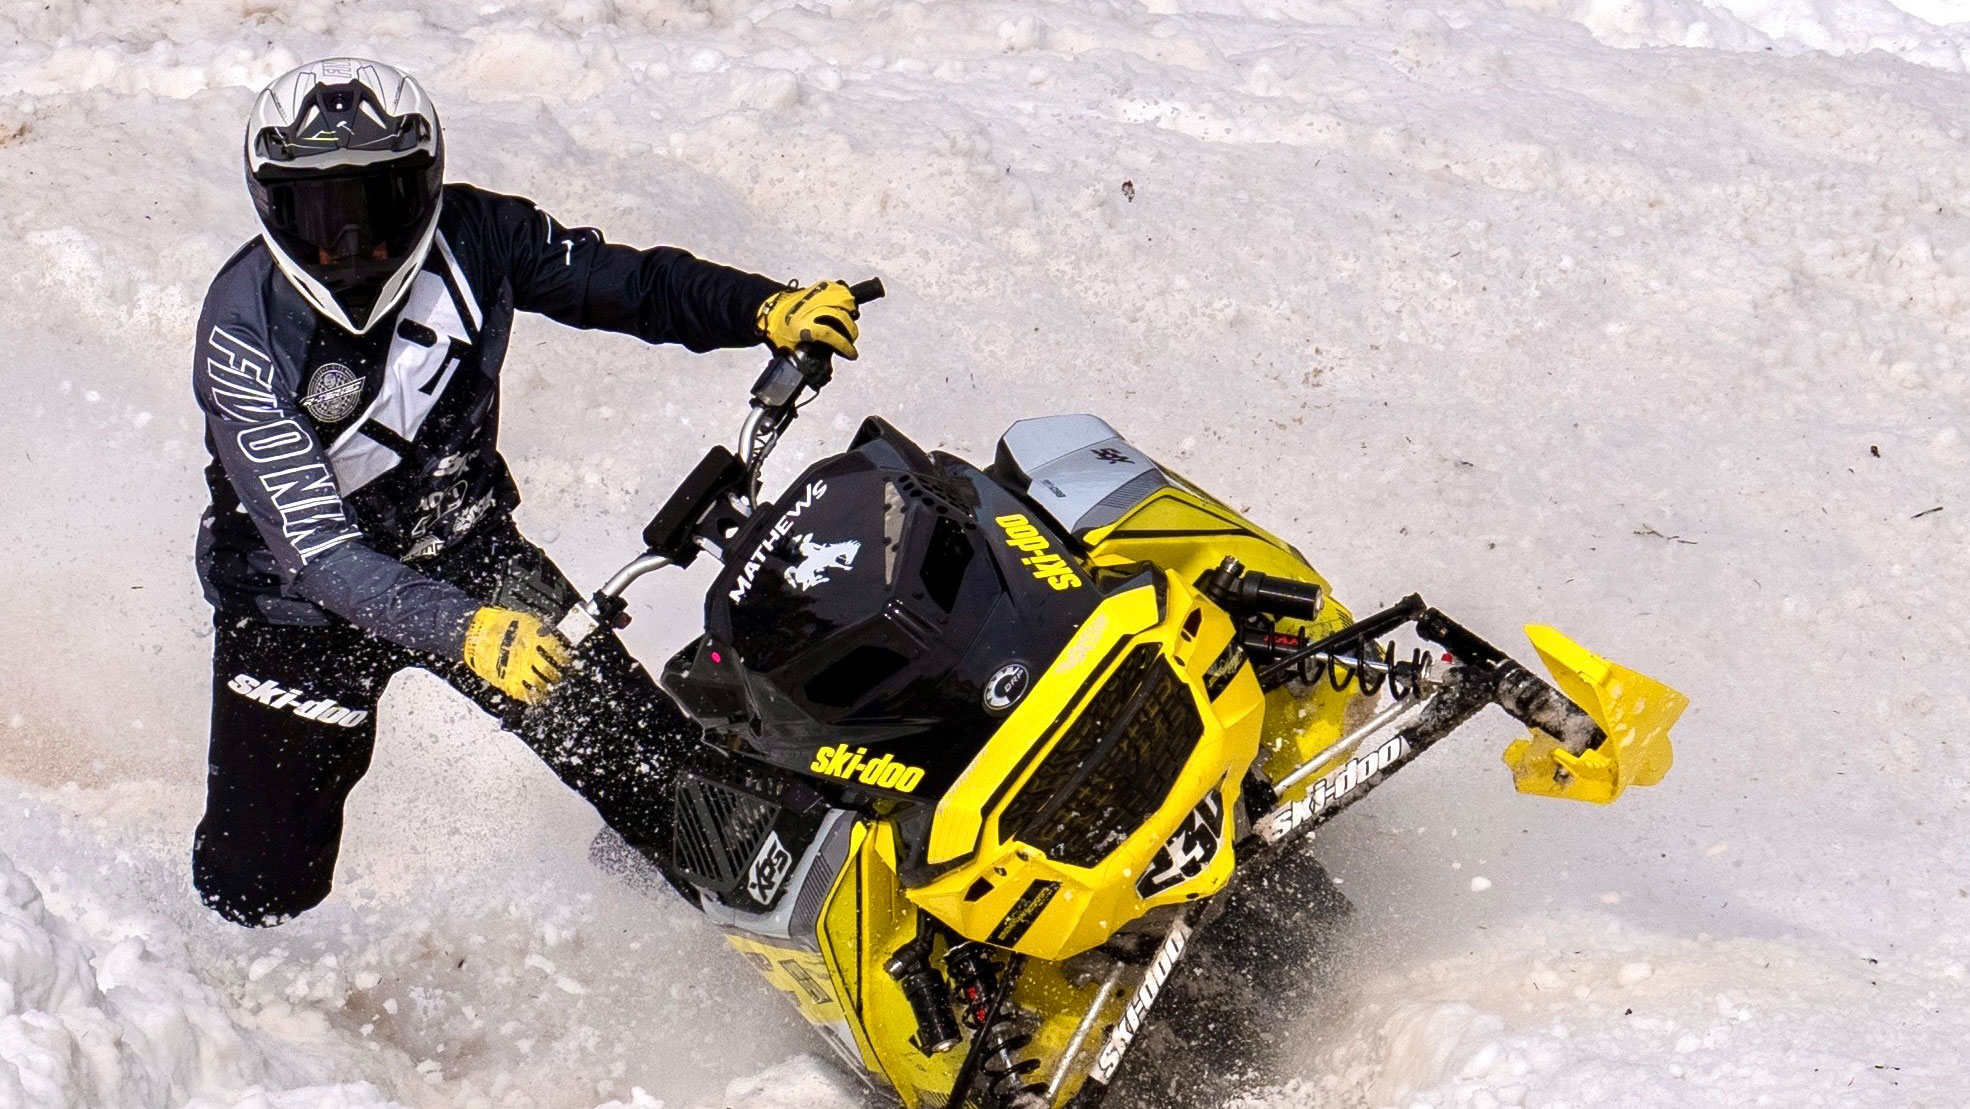 Blaine Mathews on a Ski-Doo snowmobile during a hillclimb race